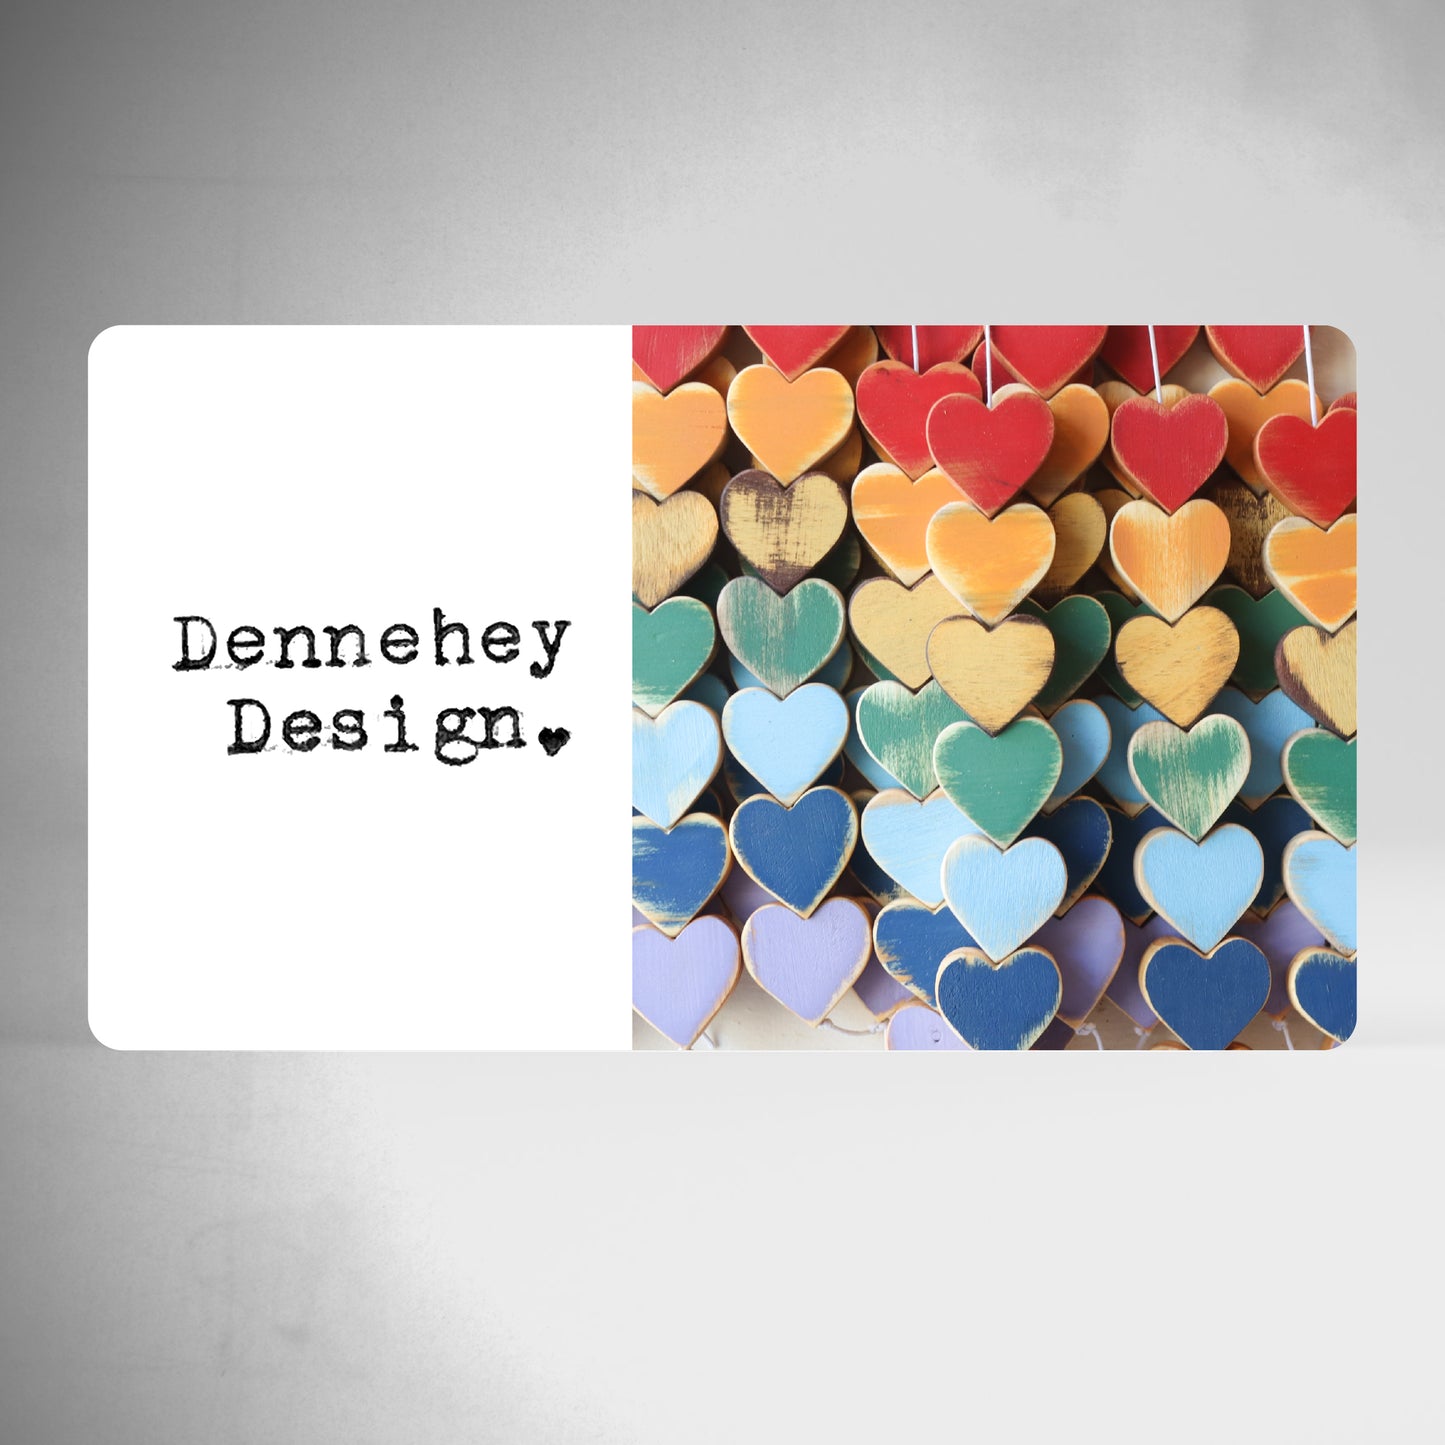 Dennehey Design Gift Cards